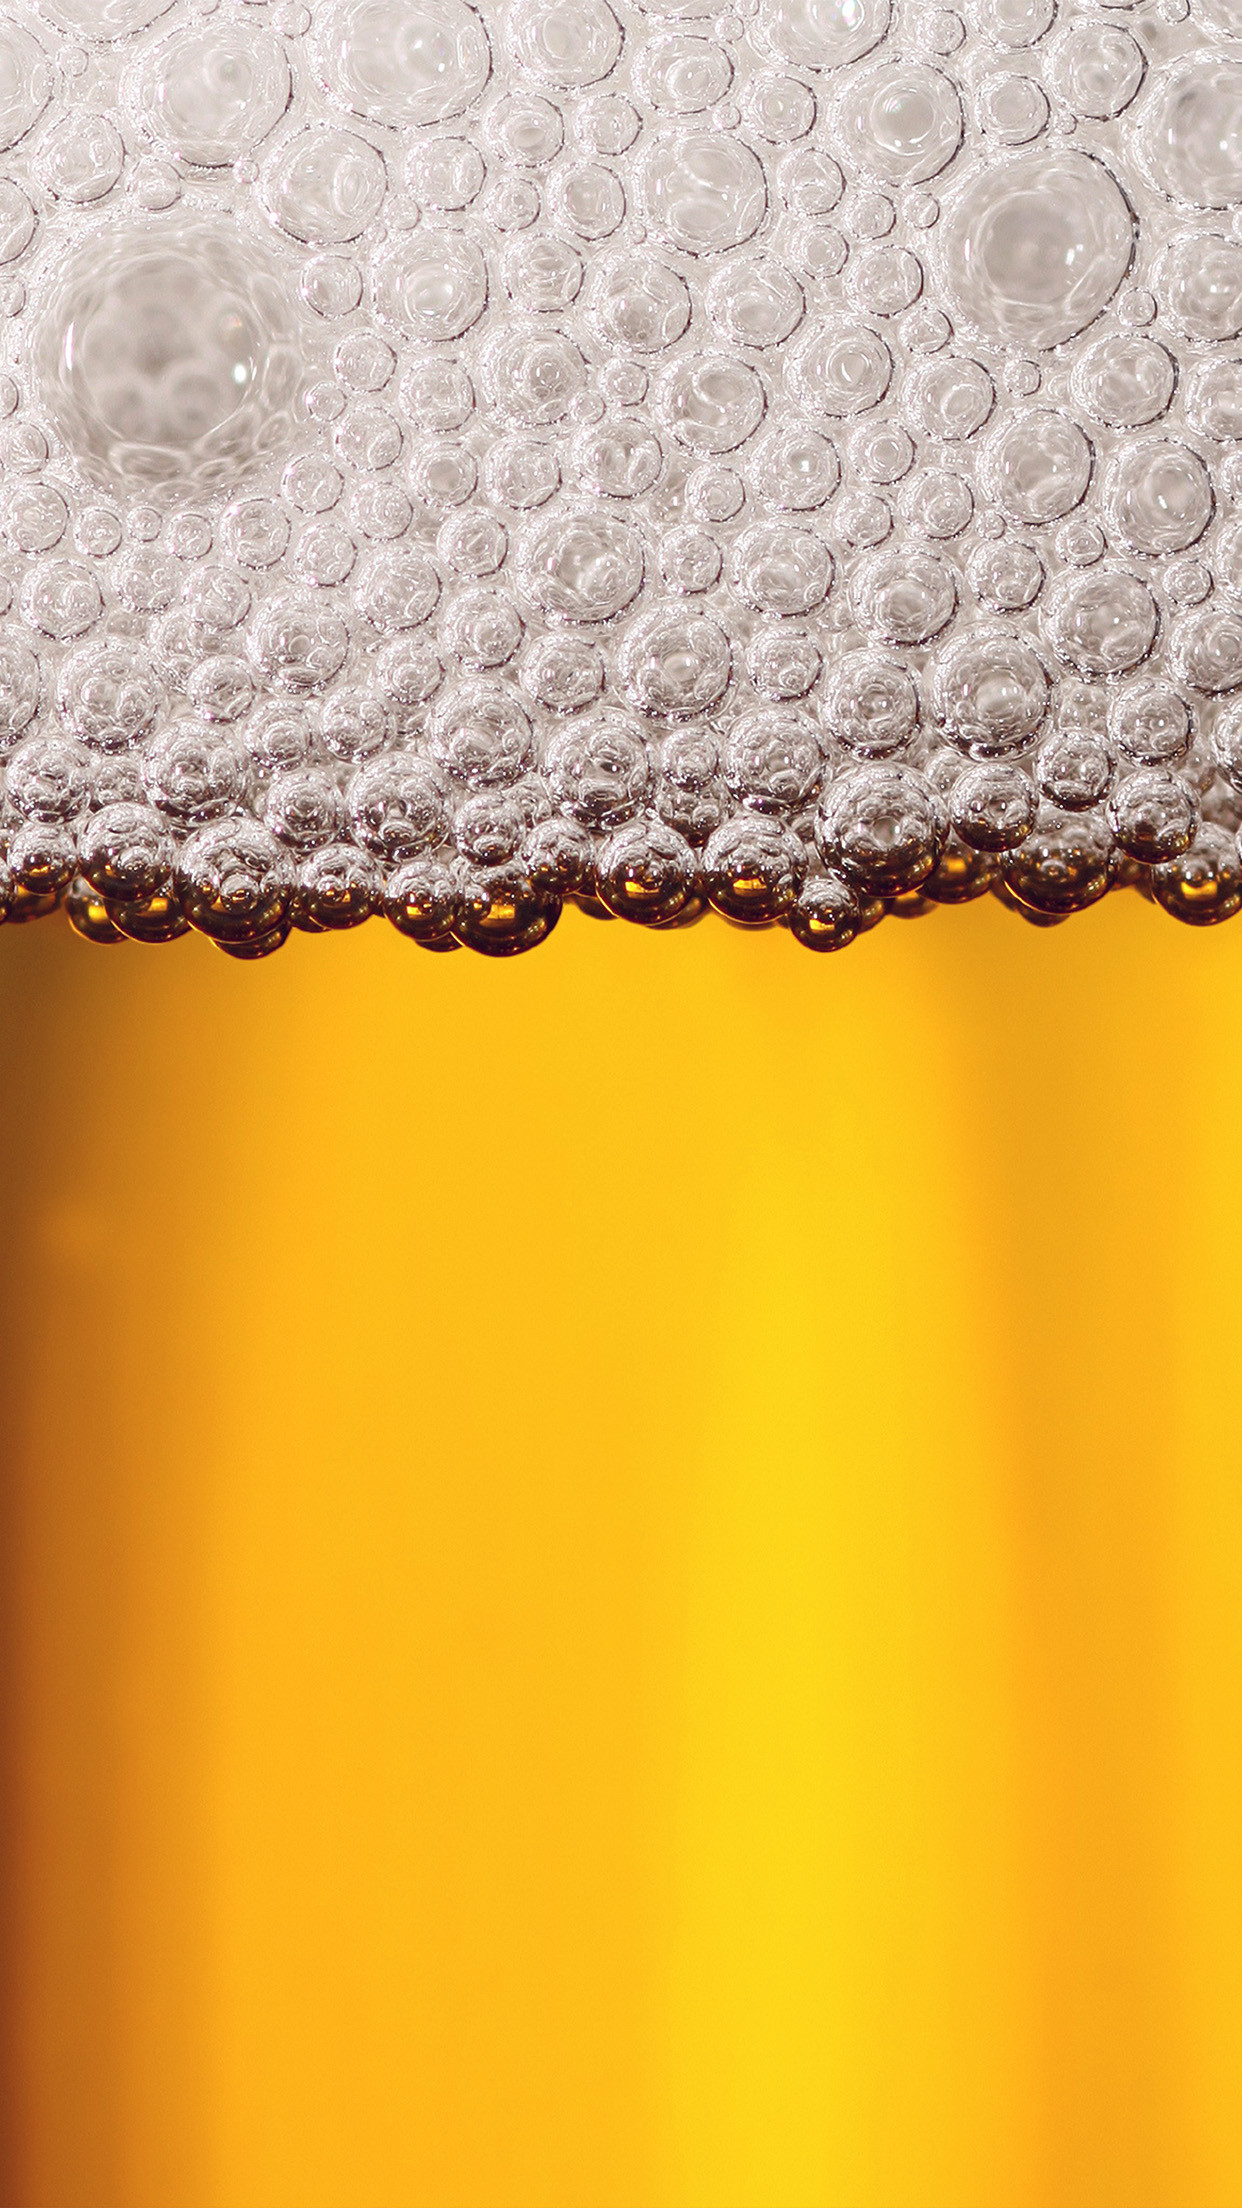 1242x2208 Glass Of Beer Foam Bubbles Close Up iPhone 6+ HD Wallpaper